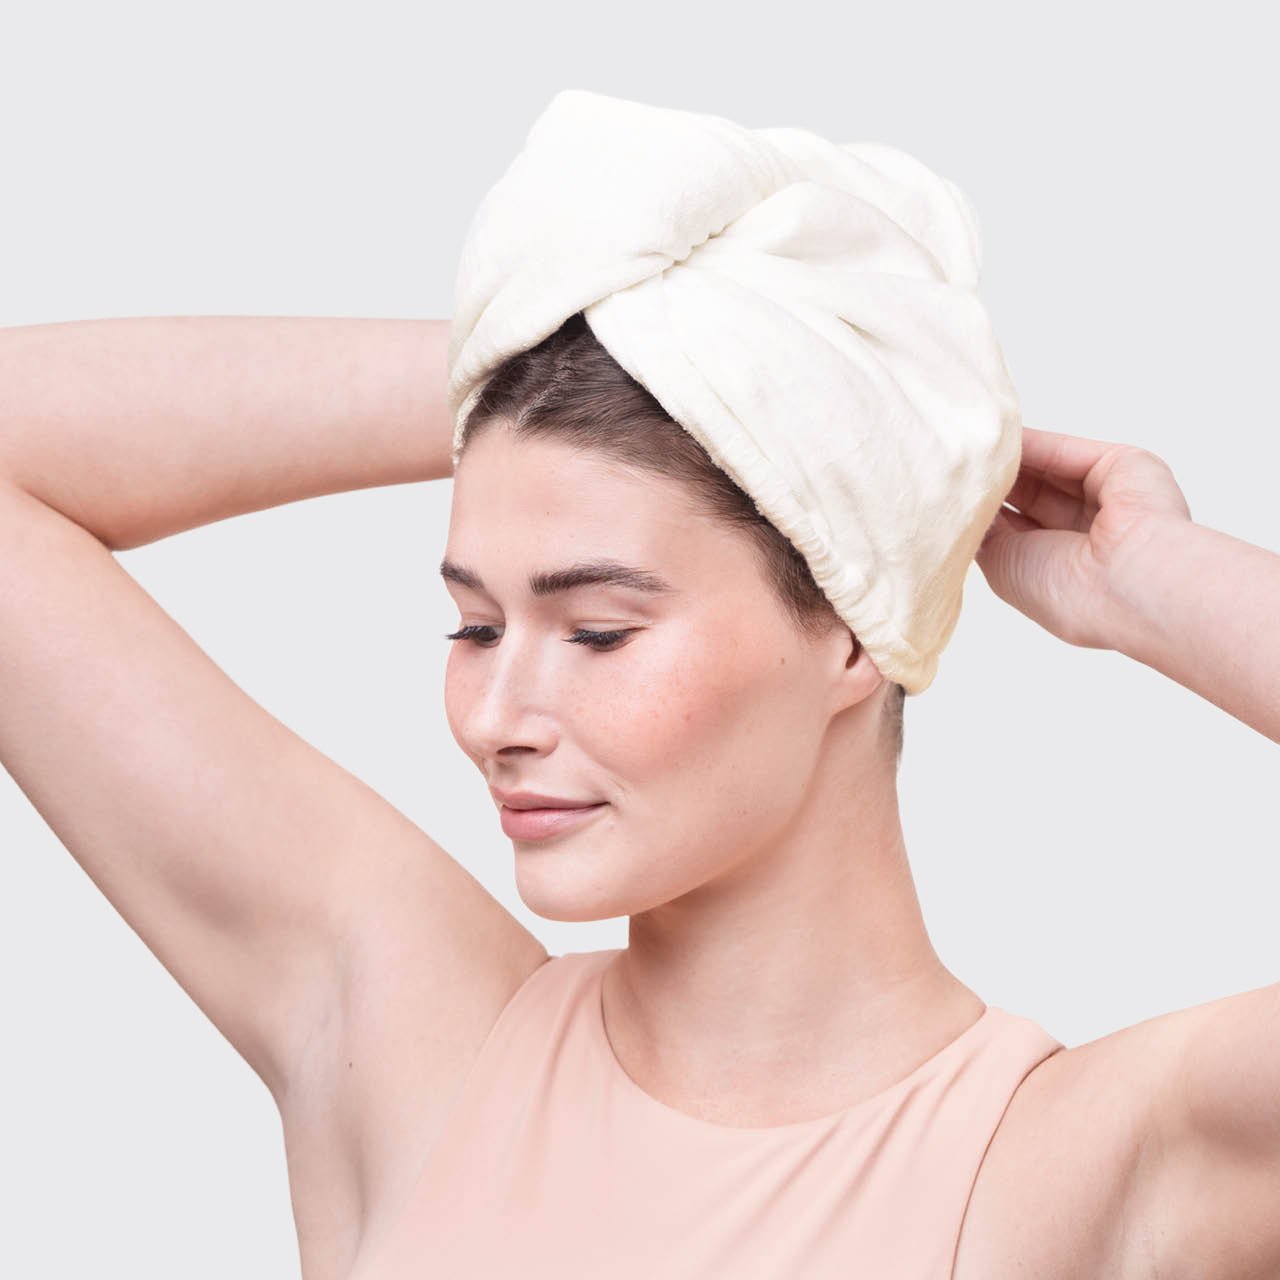 Super Microfiber Hair Towel - Glaze